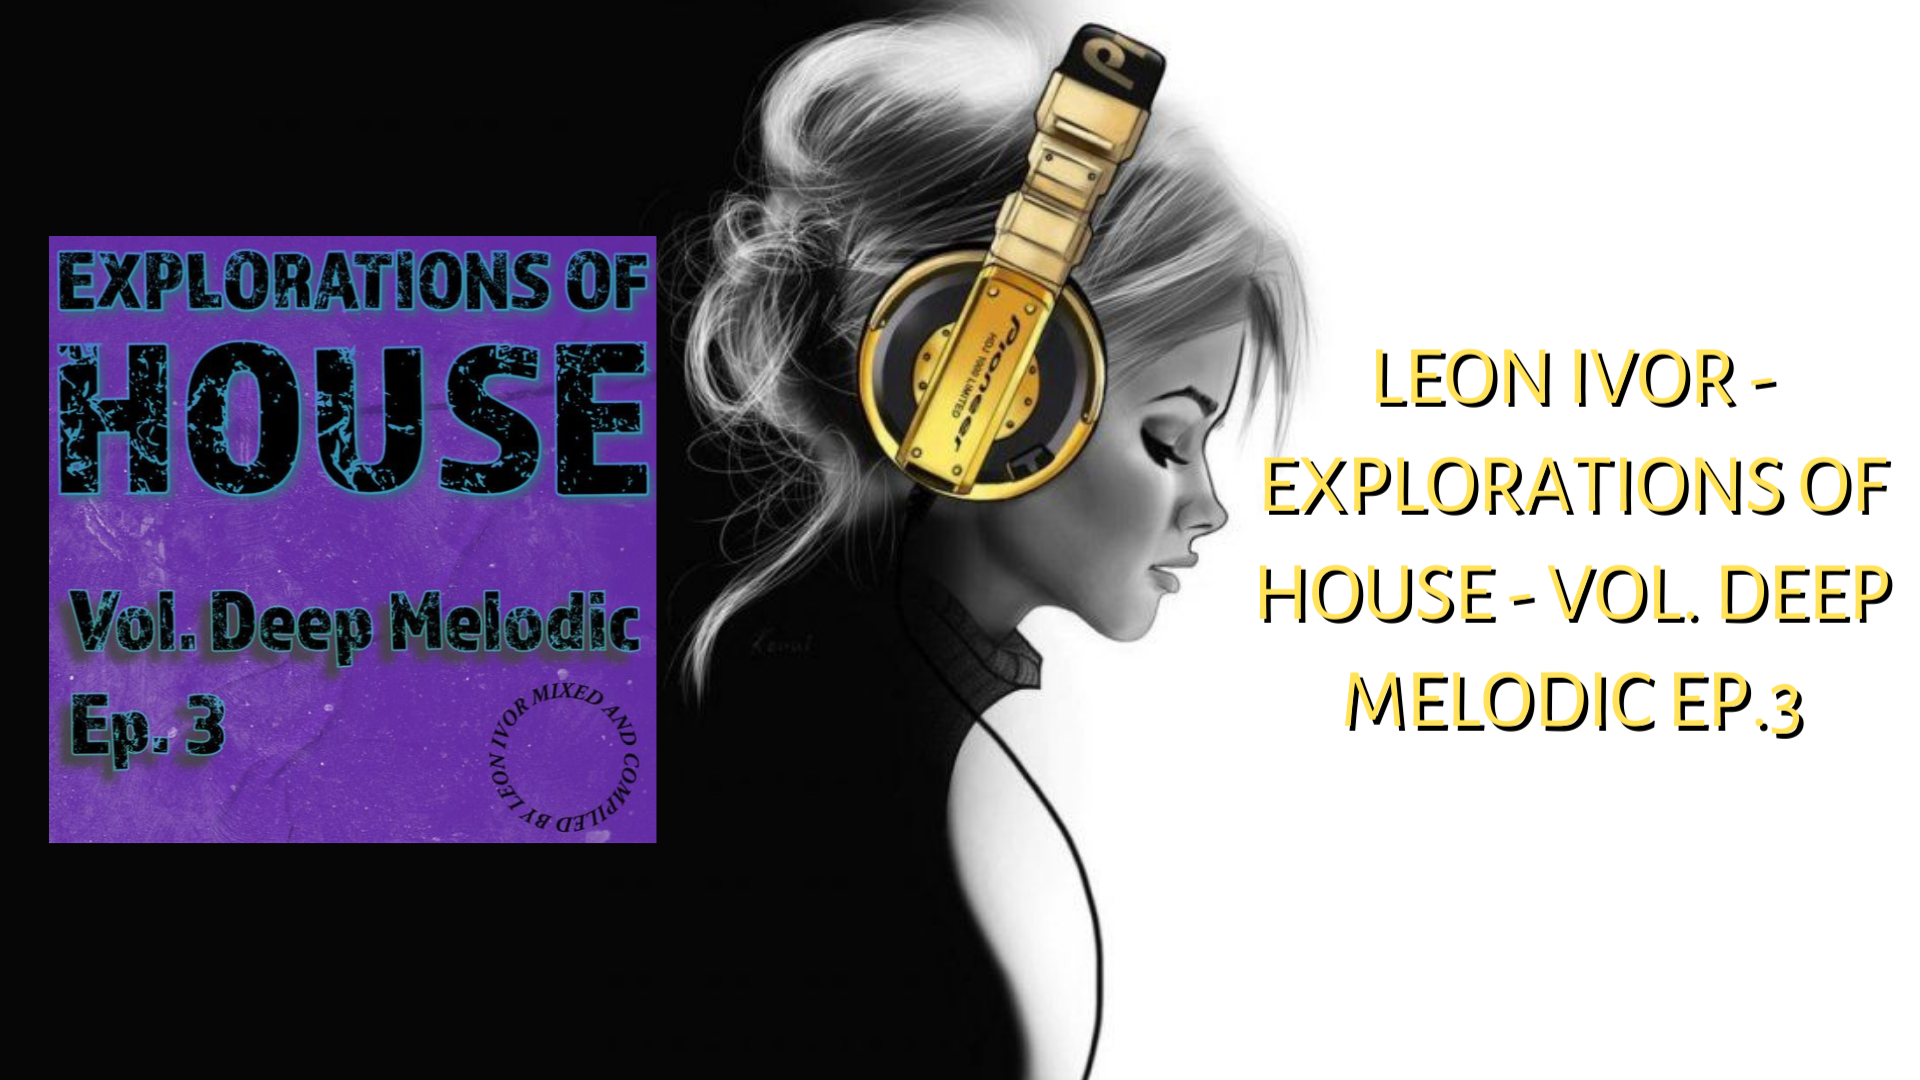 Leon Ivor - Explorations of House - Vol. Deep Melodic Ep.3